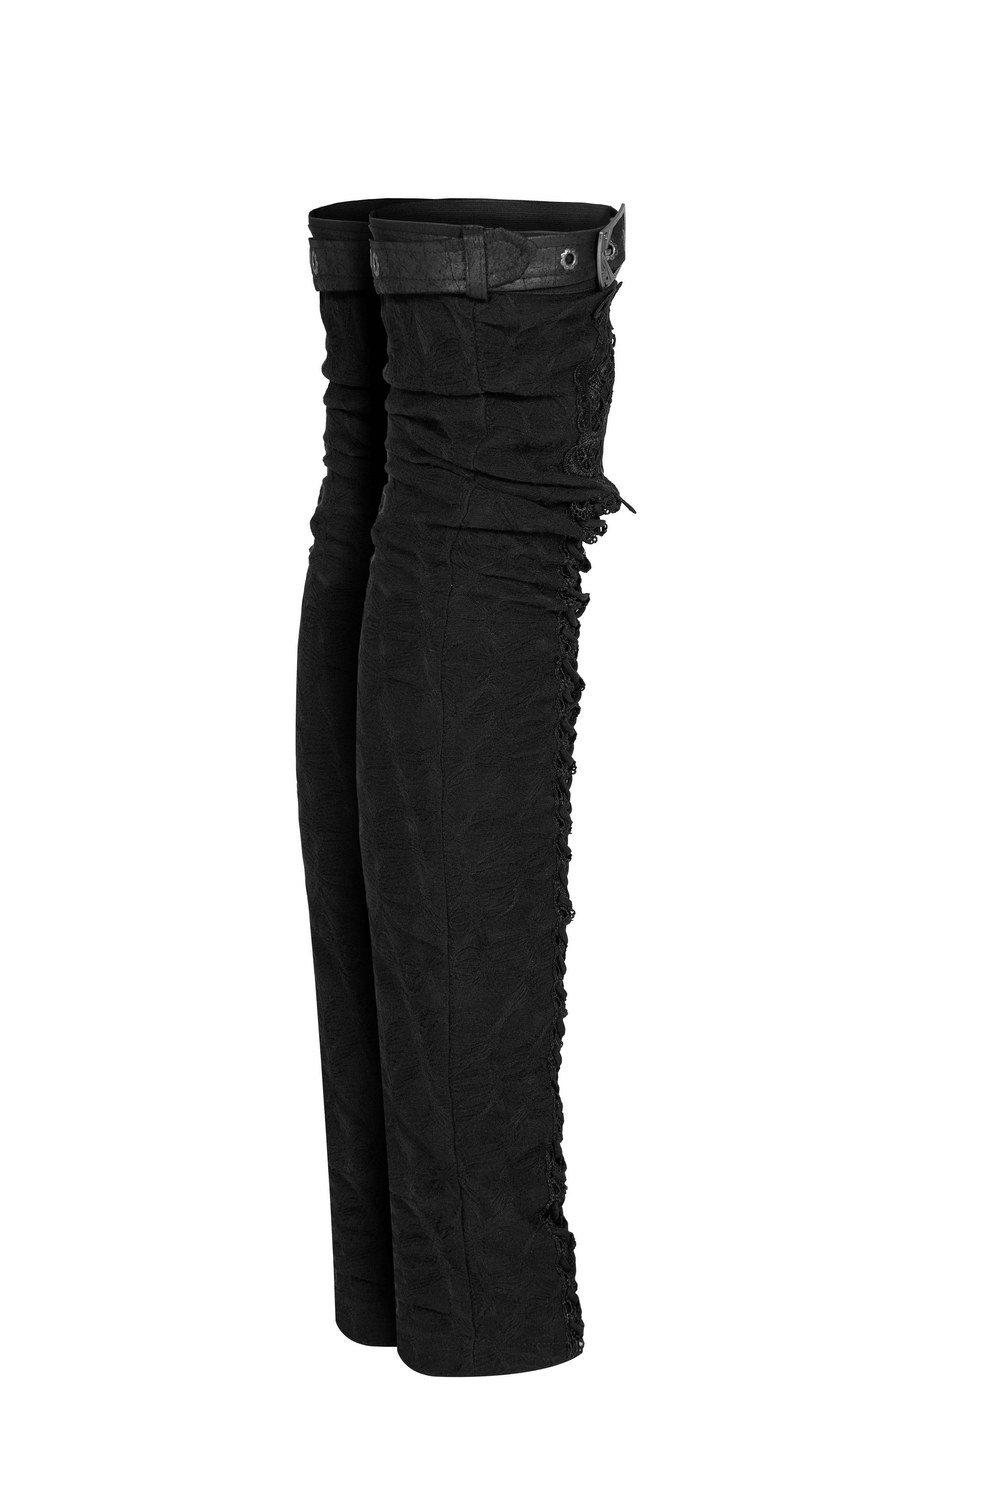 Gothic Elastic Knee High Leg Warmers with Mini Belts